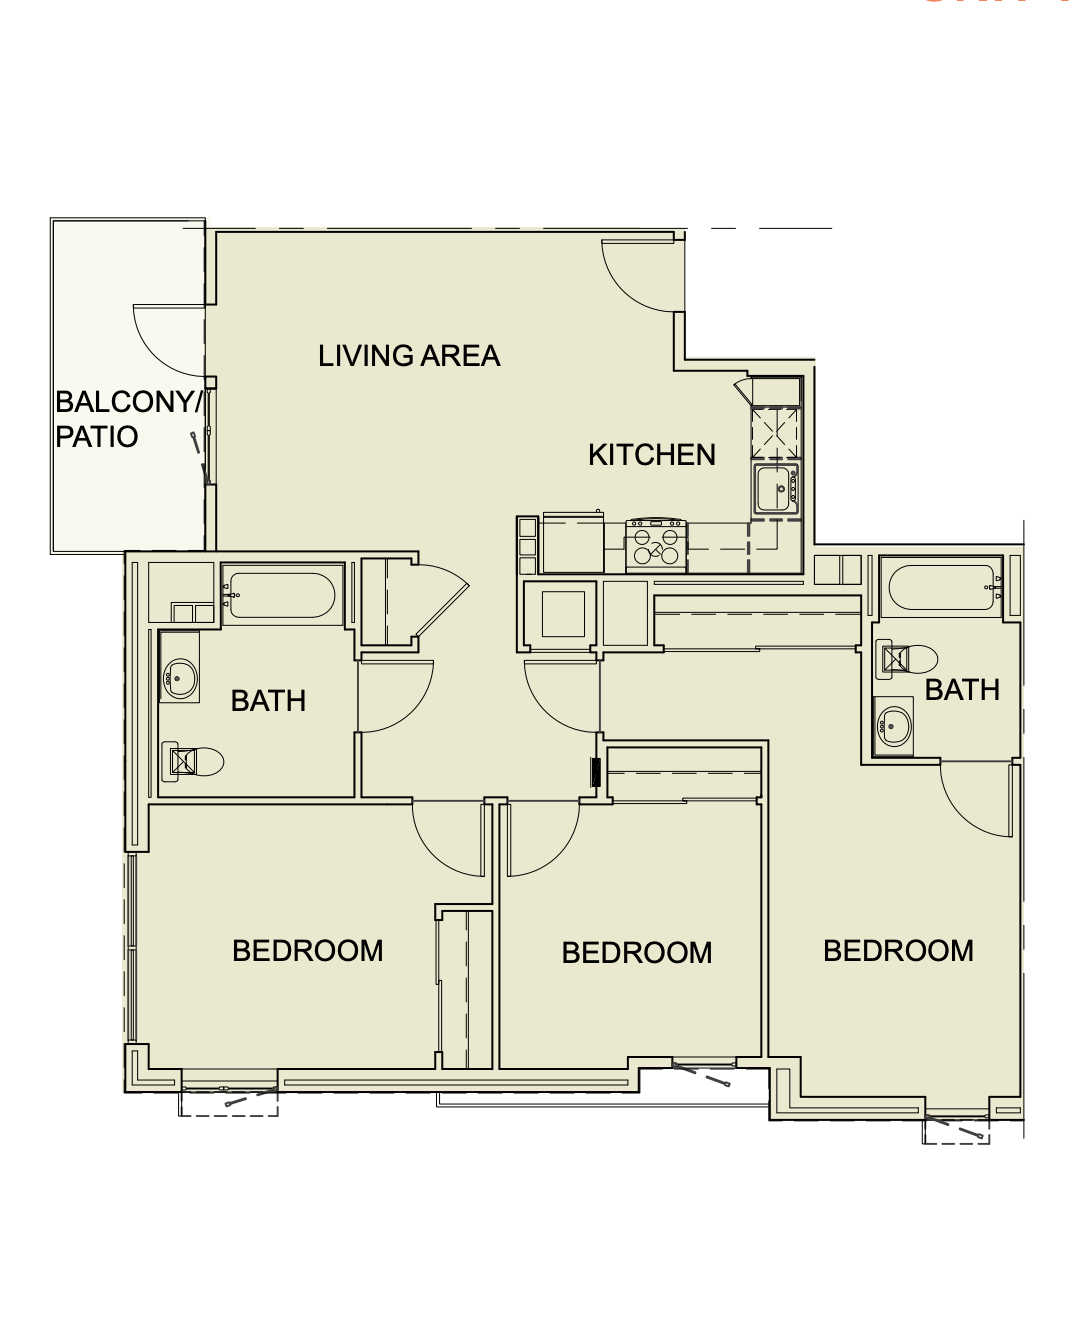 Three Bedroom/ Two Bath - 1165 SF Unit type c3